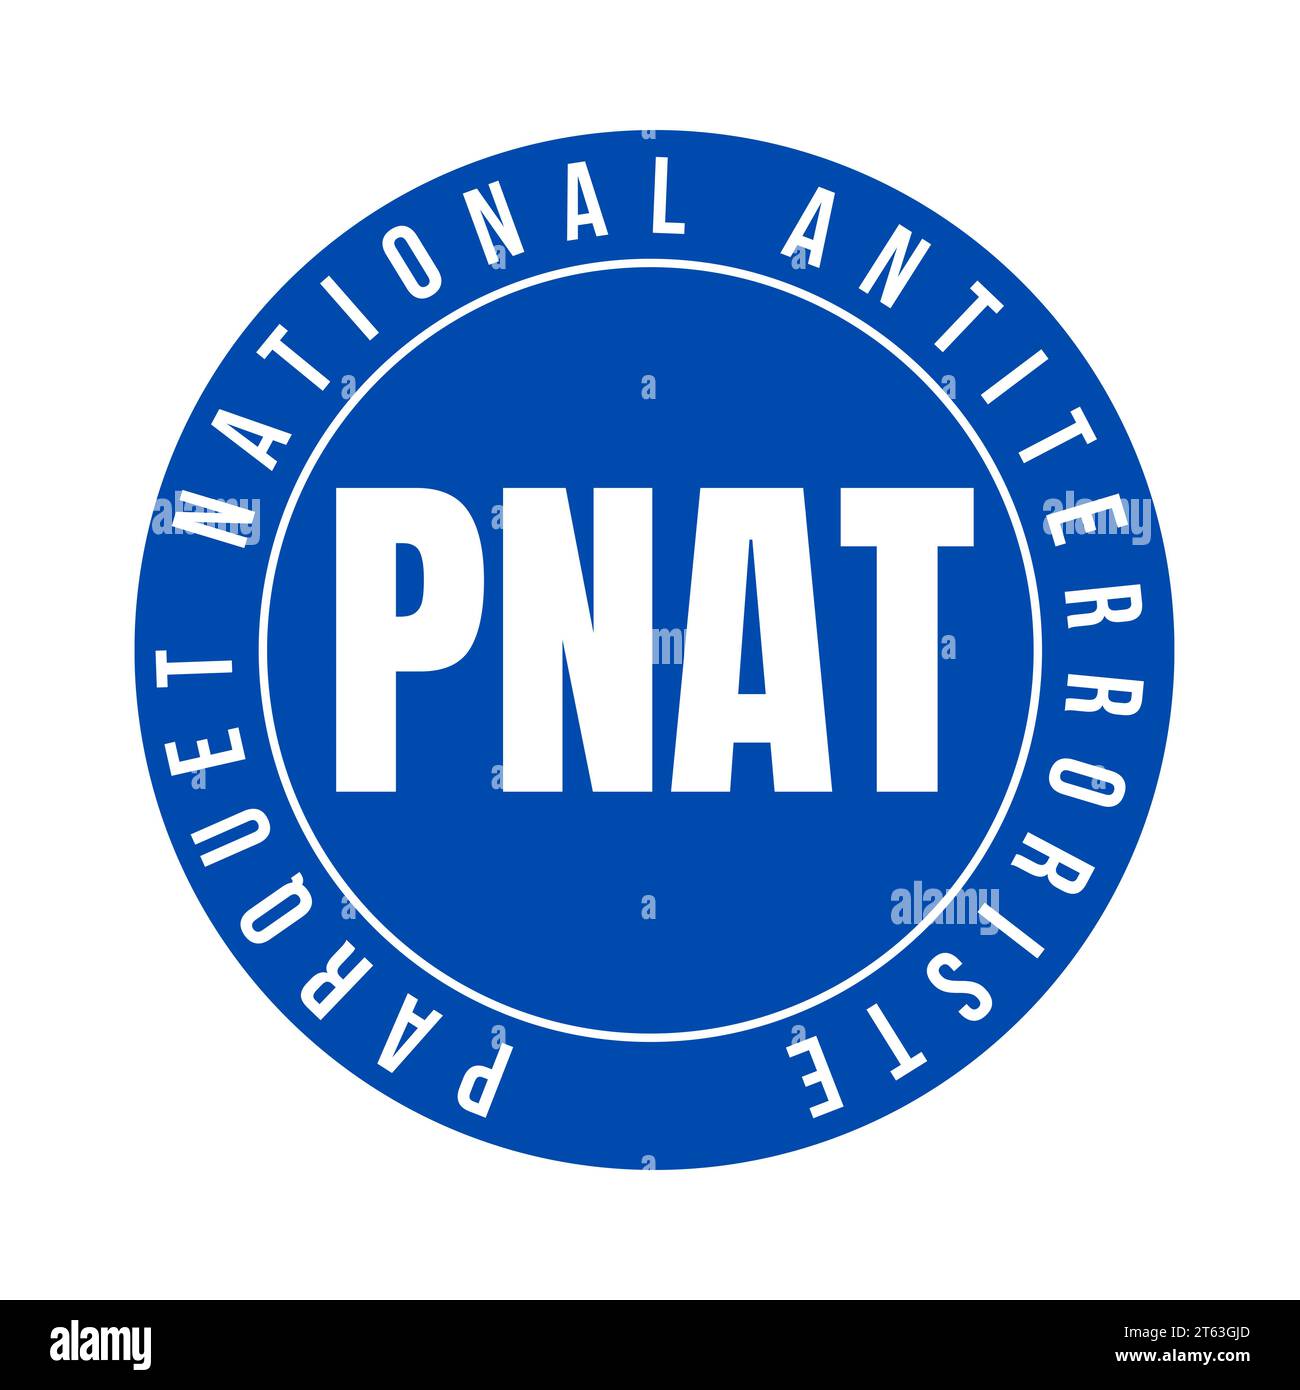 National anti-terrorism prosecution symbol icon in France called PNAT parquet national antiterroriste in French language Stock Photo